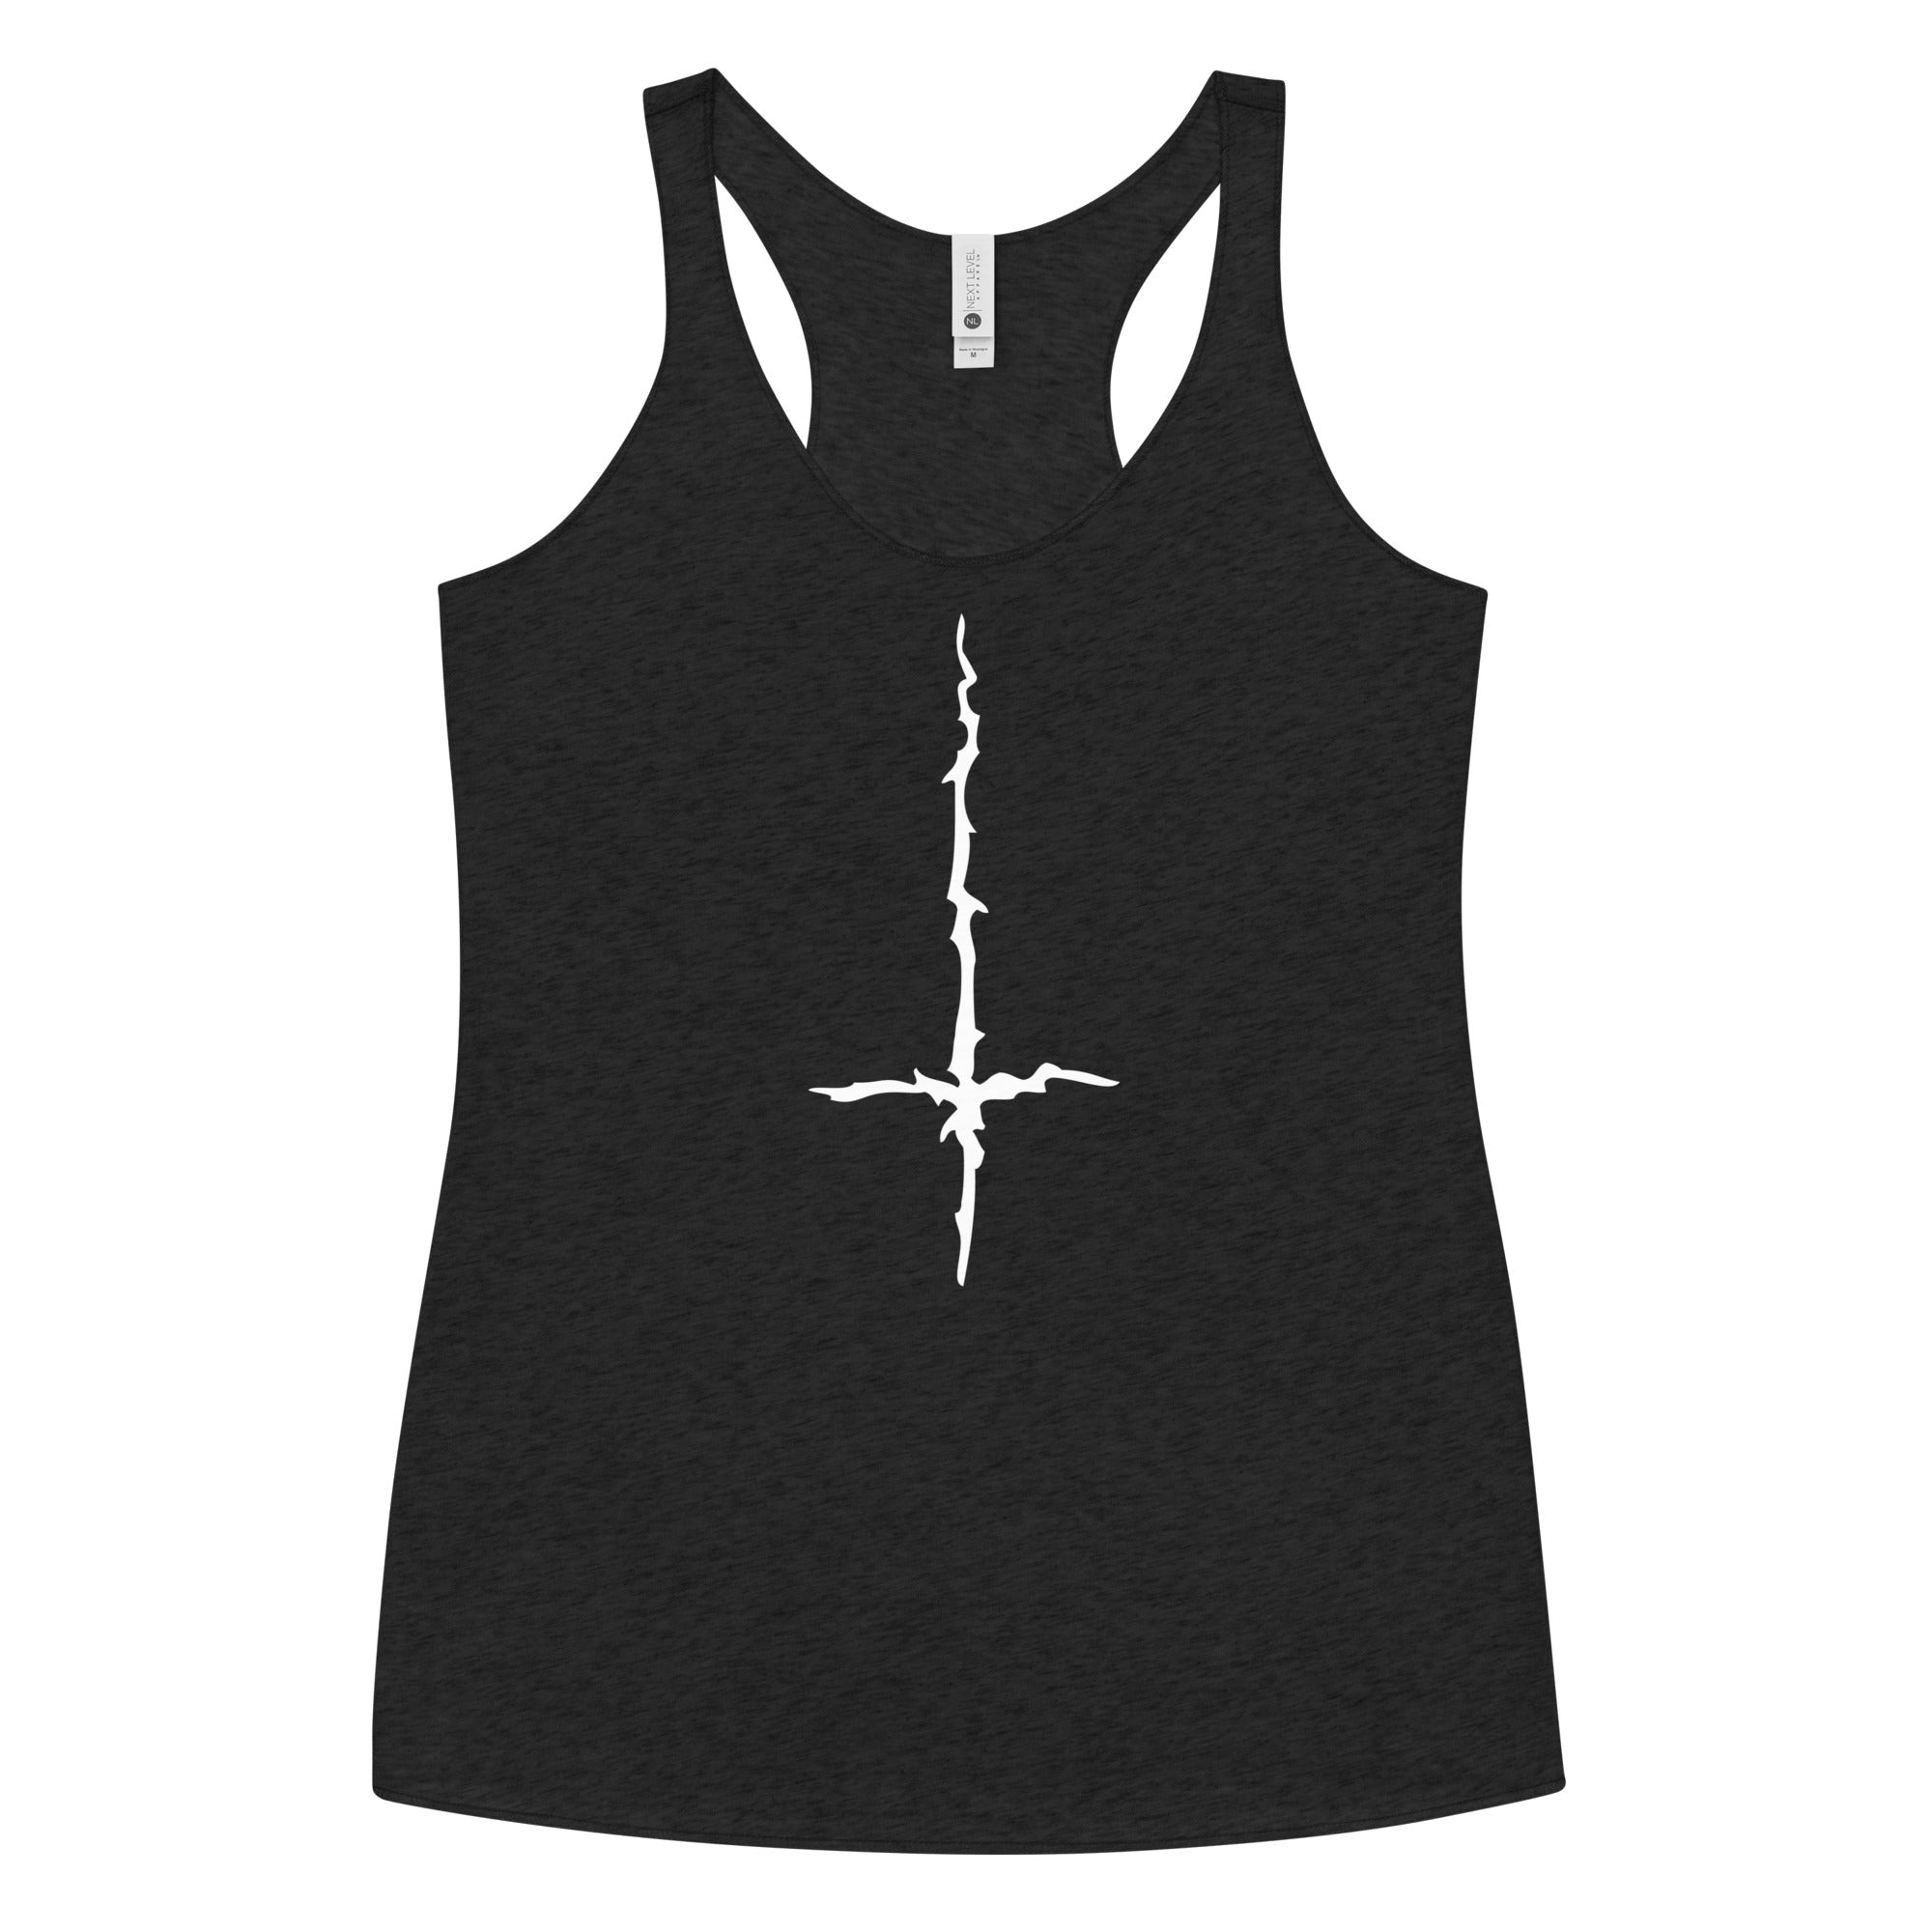 White Melting Inverted Cross Black Metal Style Women's Racerback Tank Top Shirt